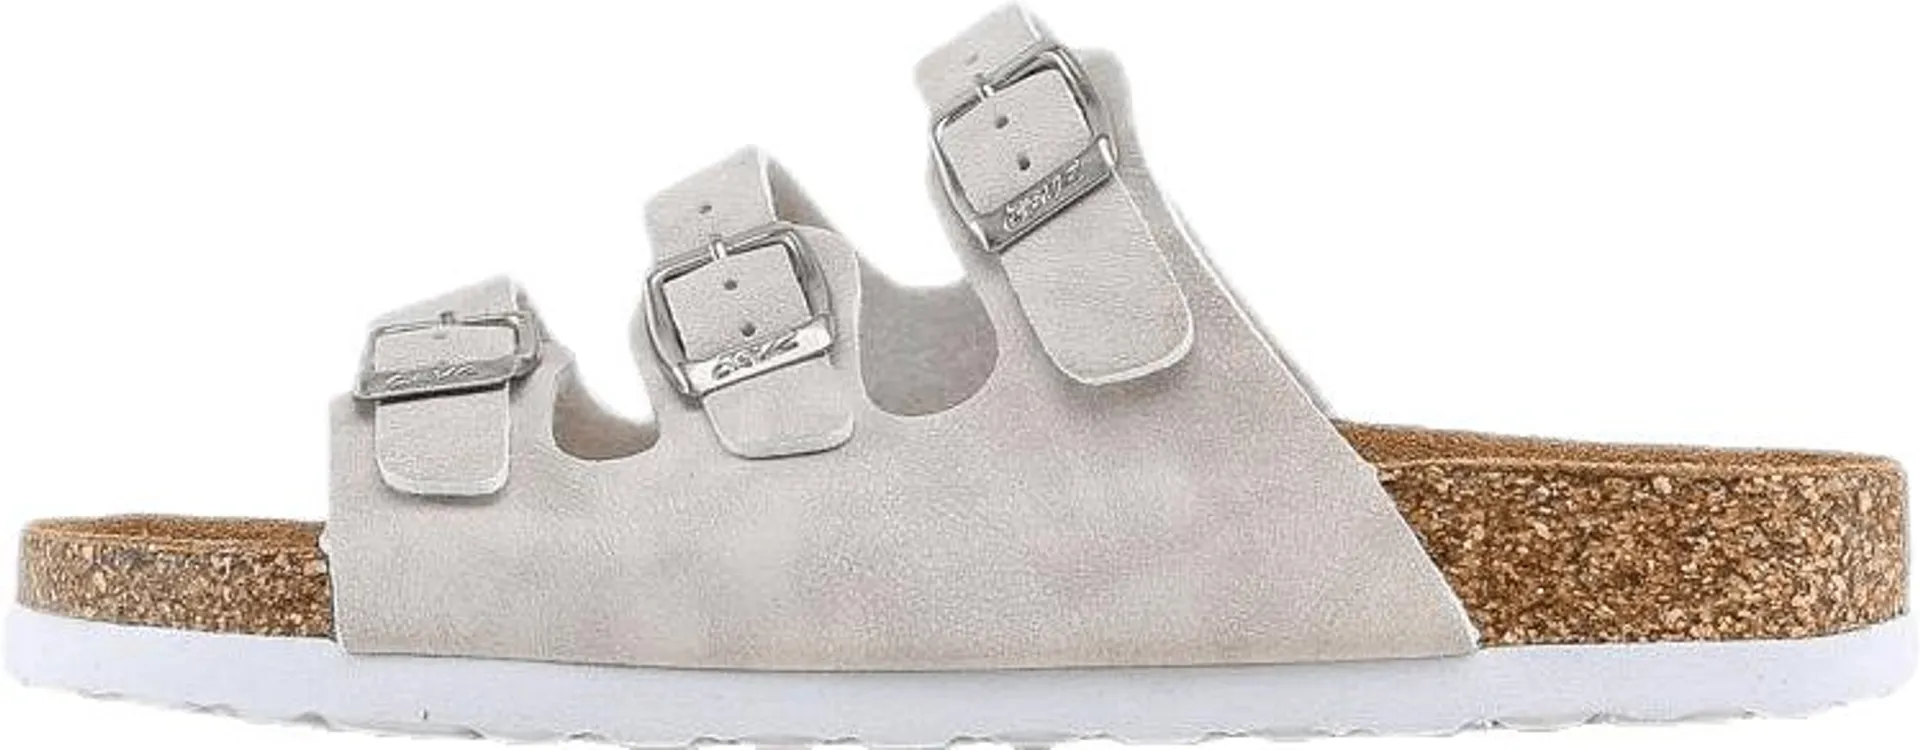 Santa Cork Sandals Grey